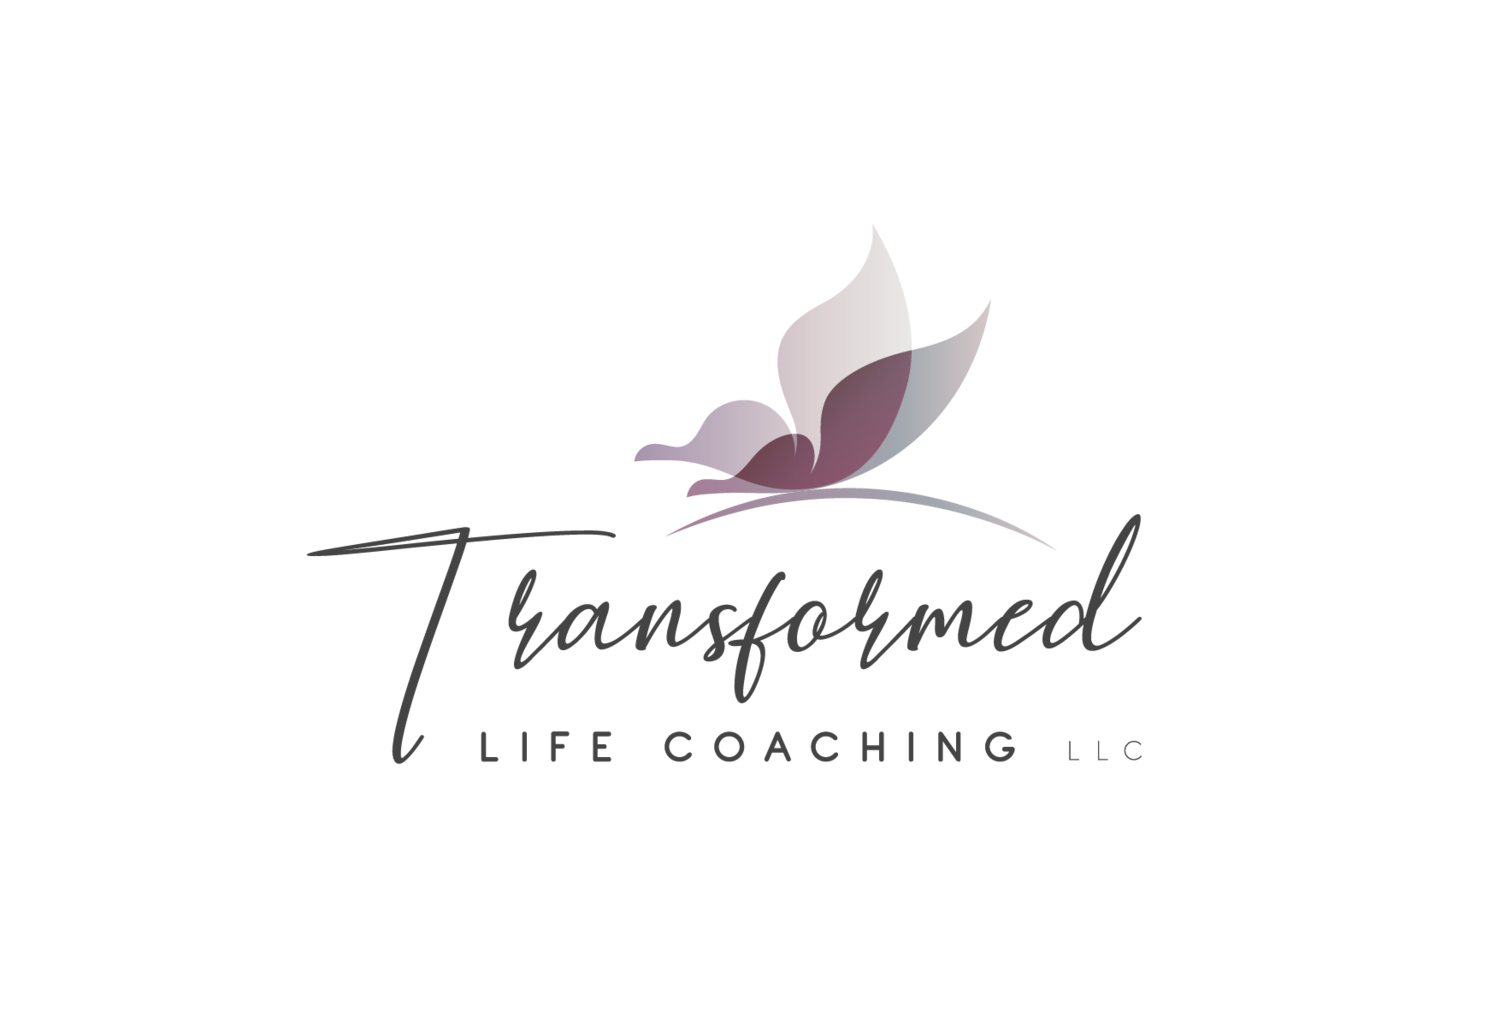 Transformed Life Coaching LLC